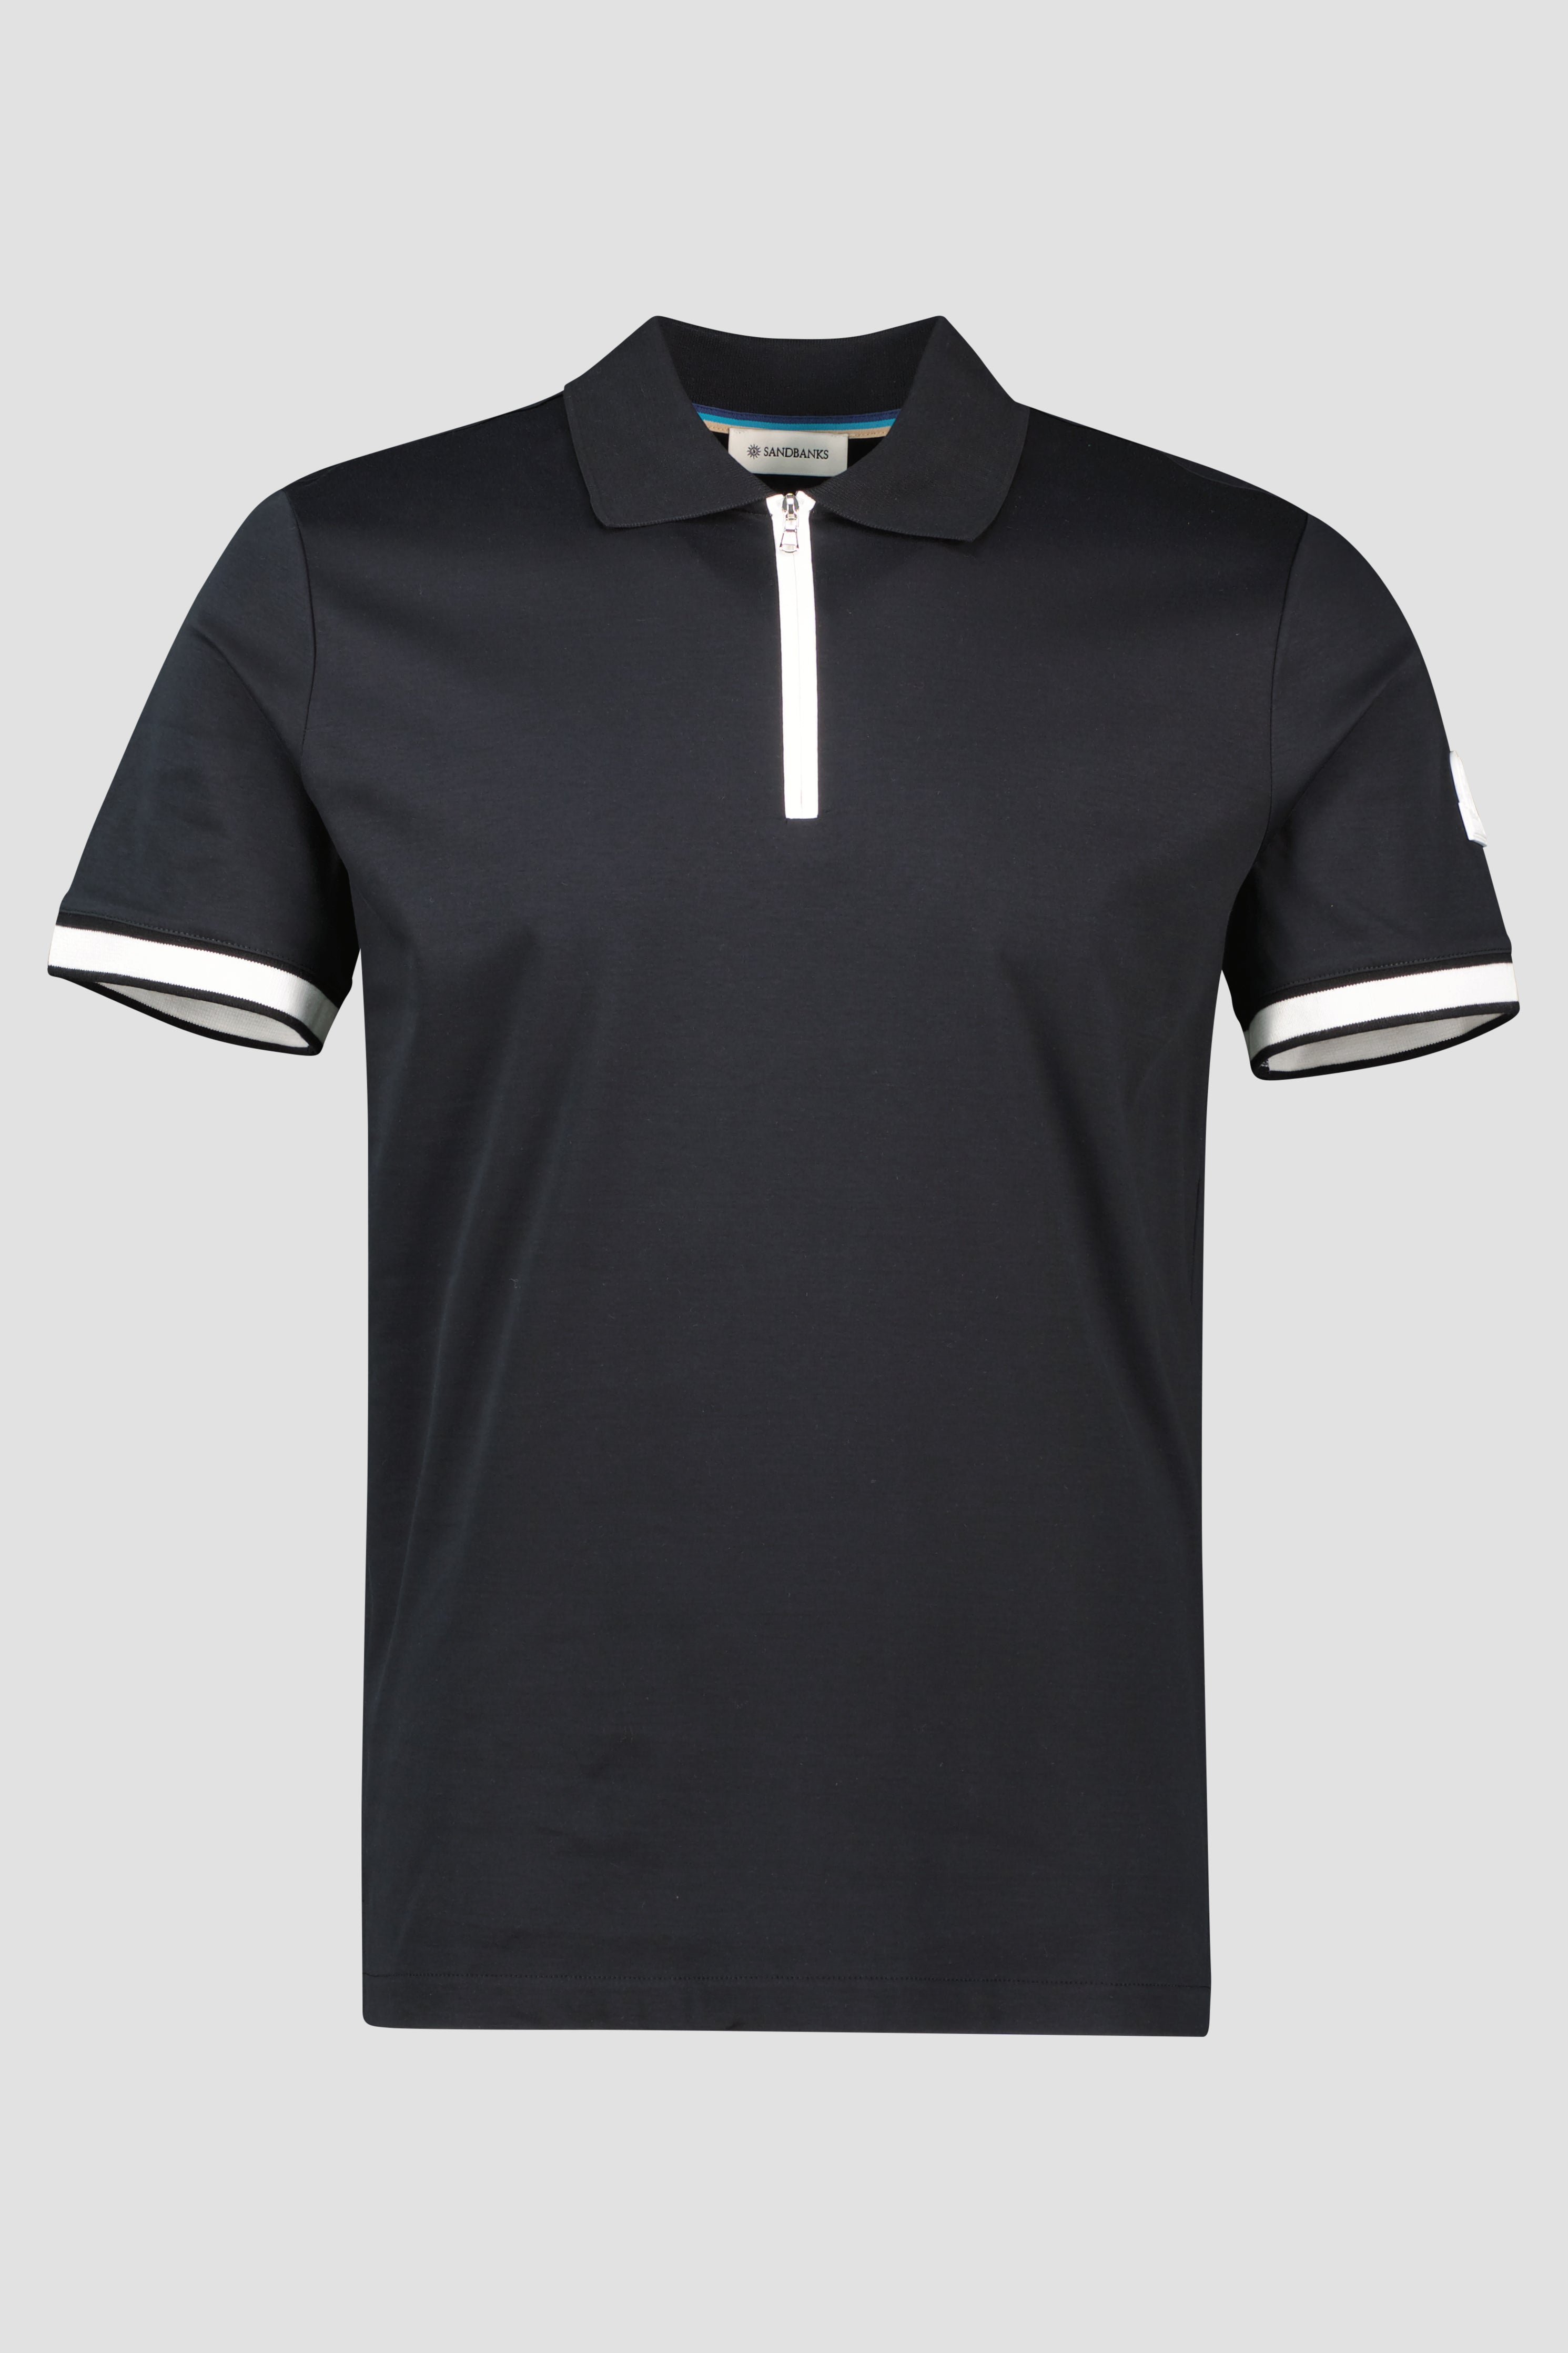 Men's Sandbanks Black Silicone Zip Polo Shirt